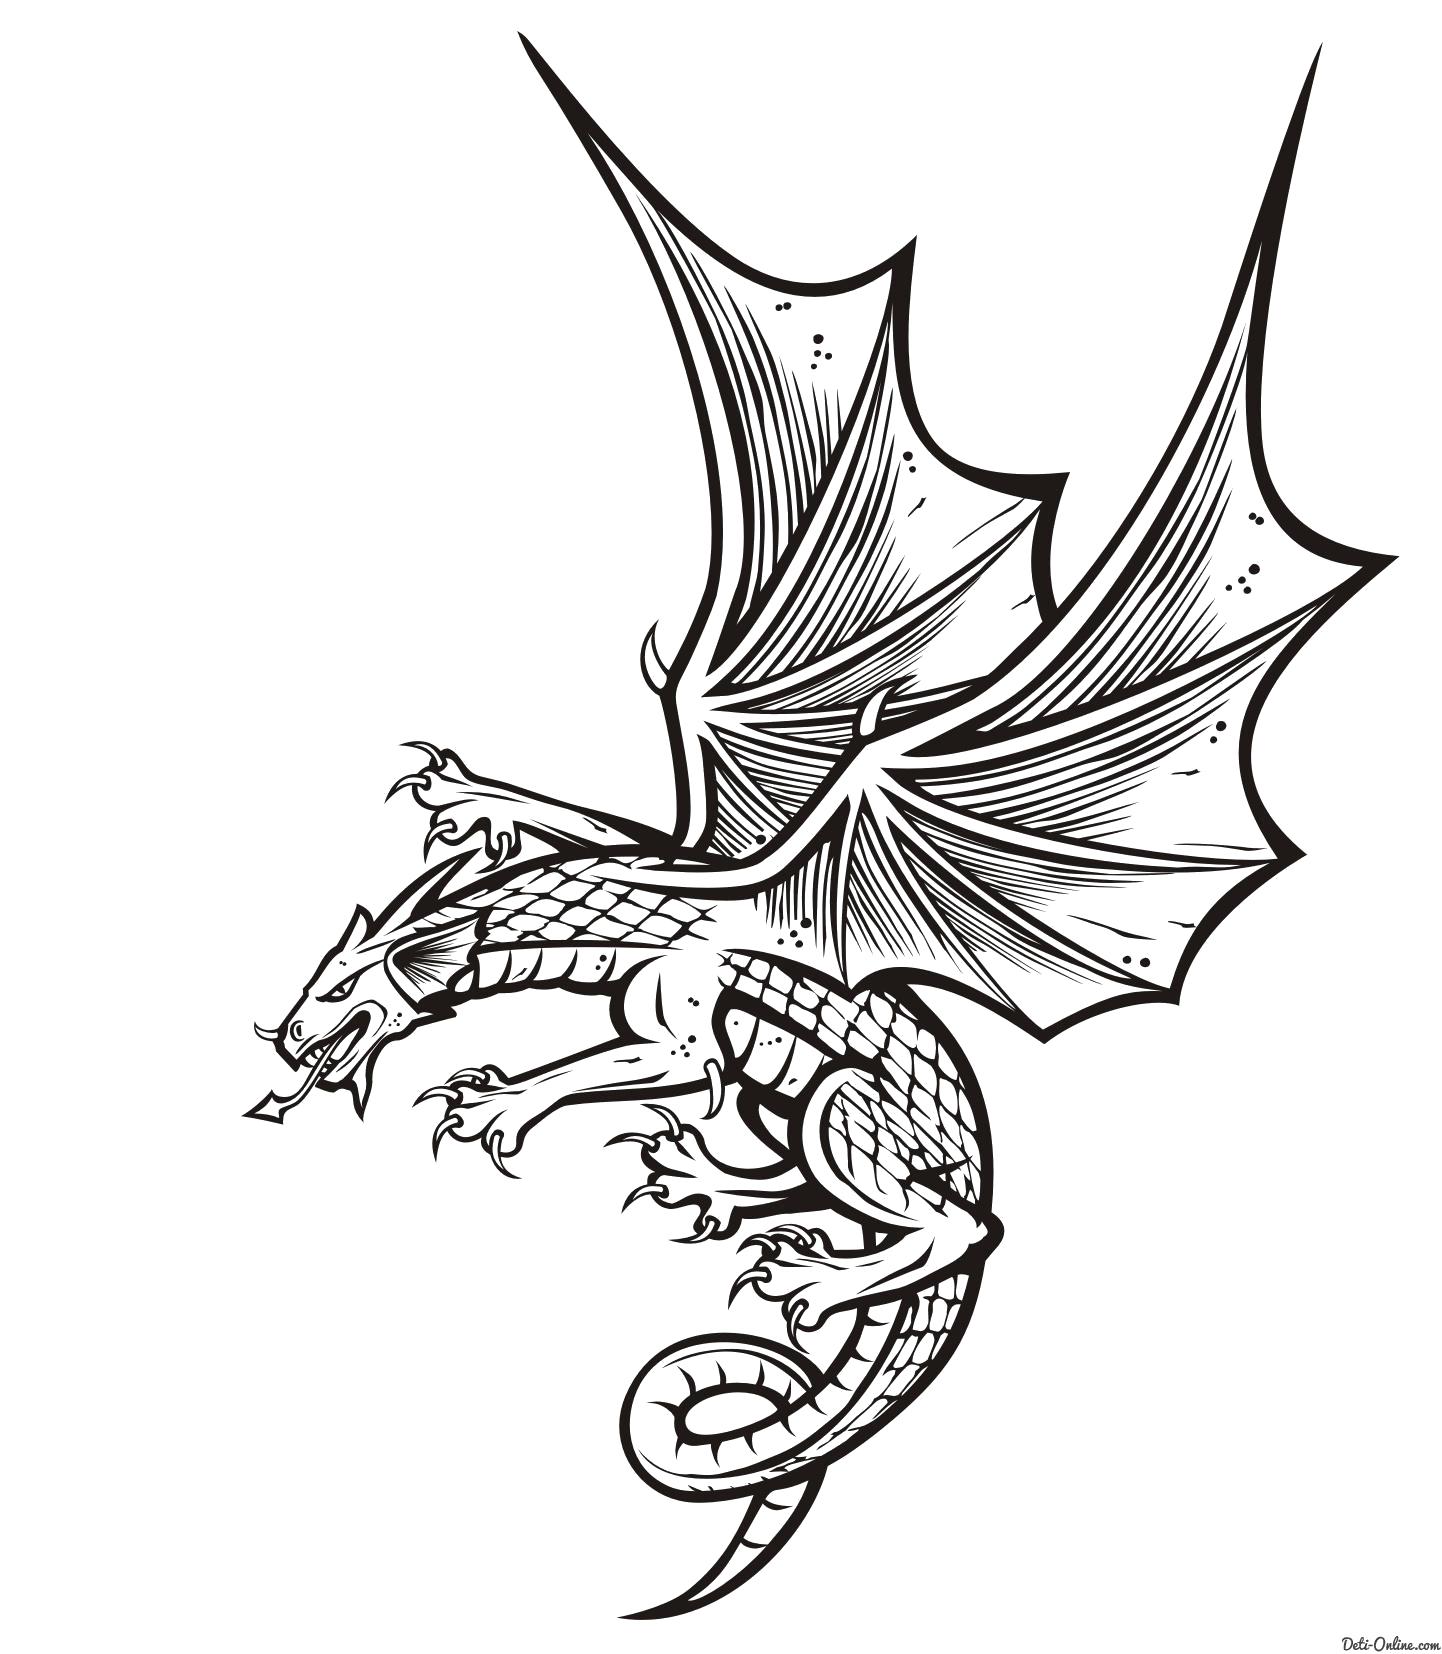 Название: Раскраска Раскраска Злой дракон. Категория: мифические существа. Теги: дракон.